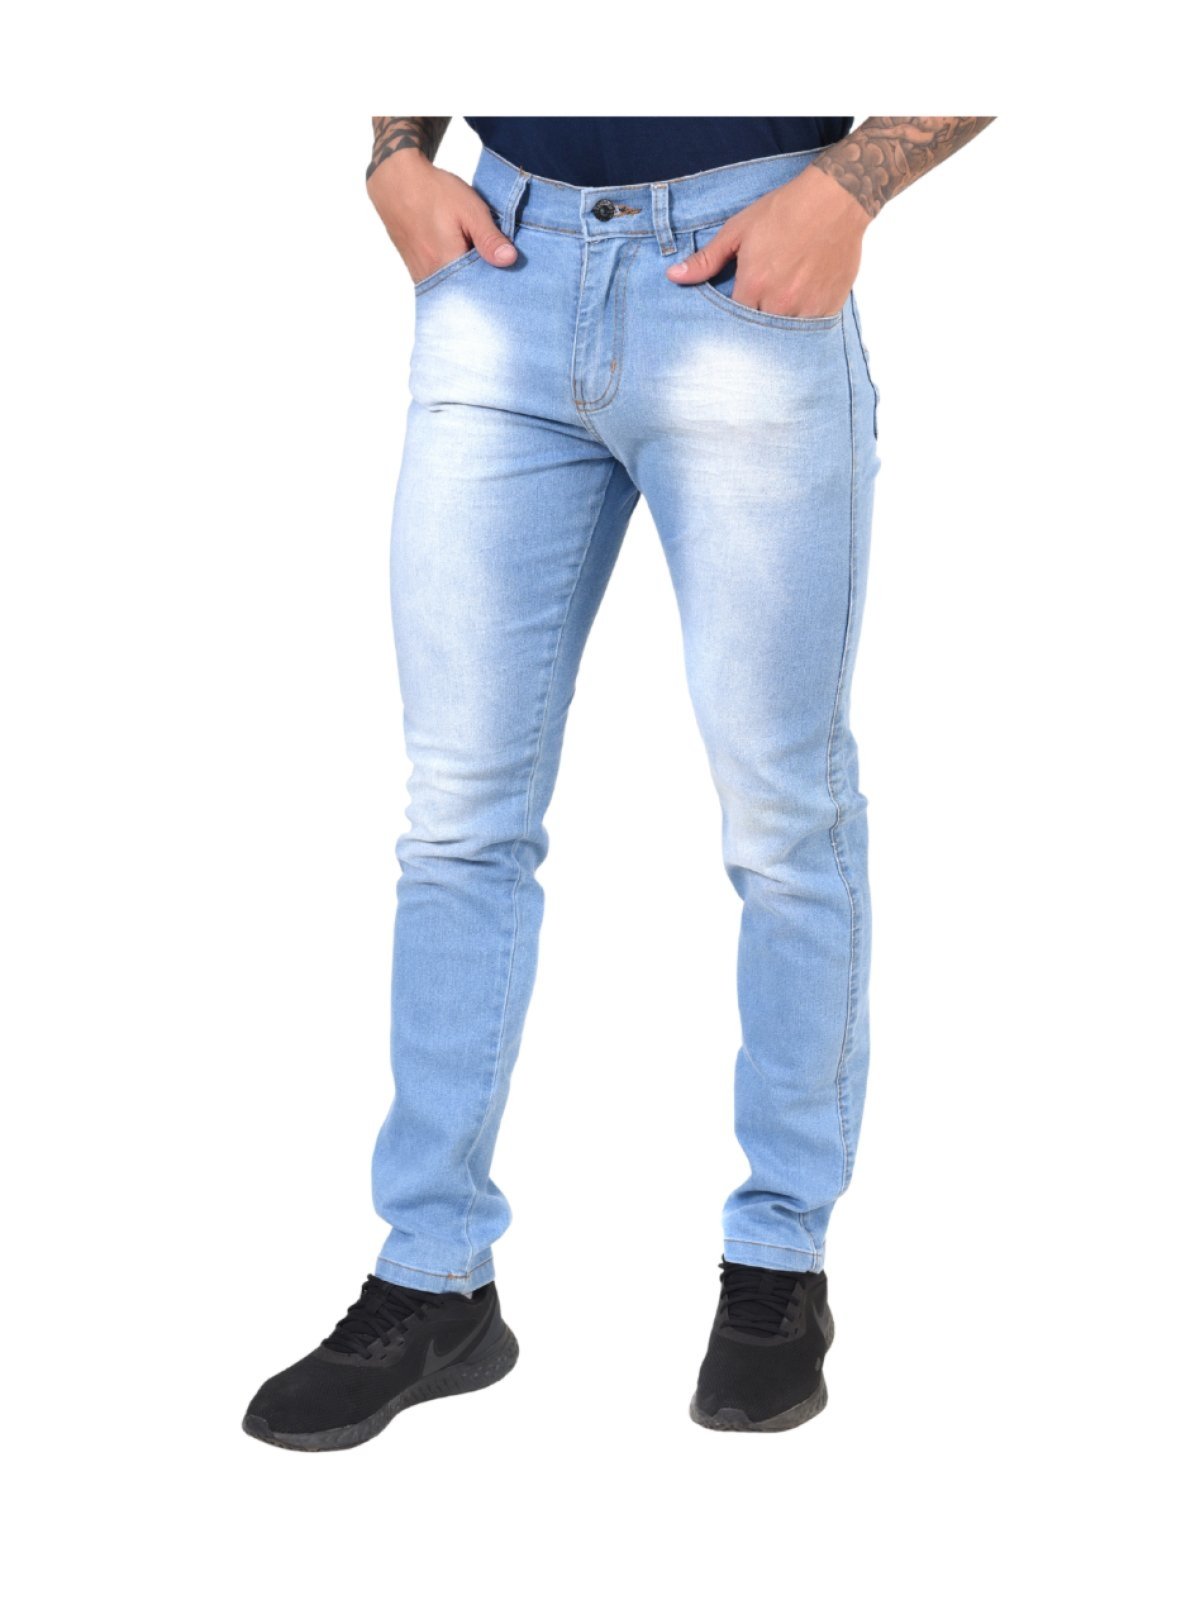 Calça Jeans Skinny Slim Casual Elastano Sport Masculina 441 - Azul Claro